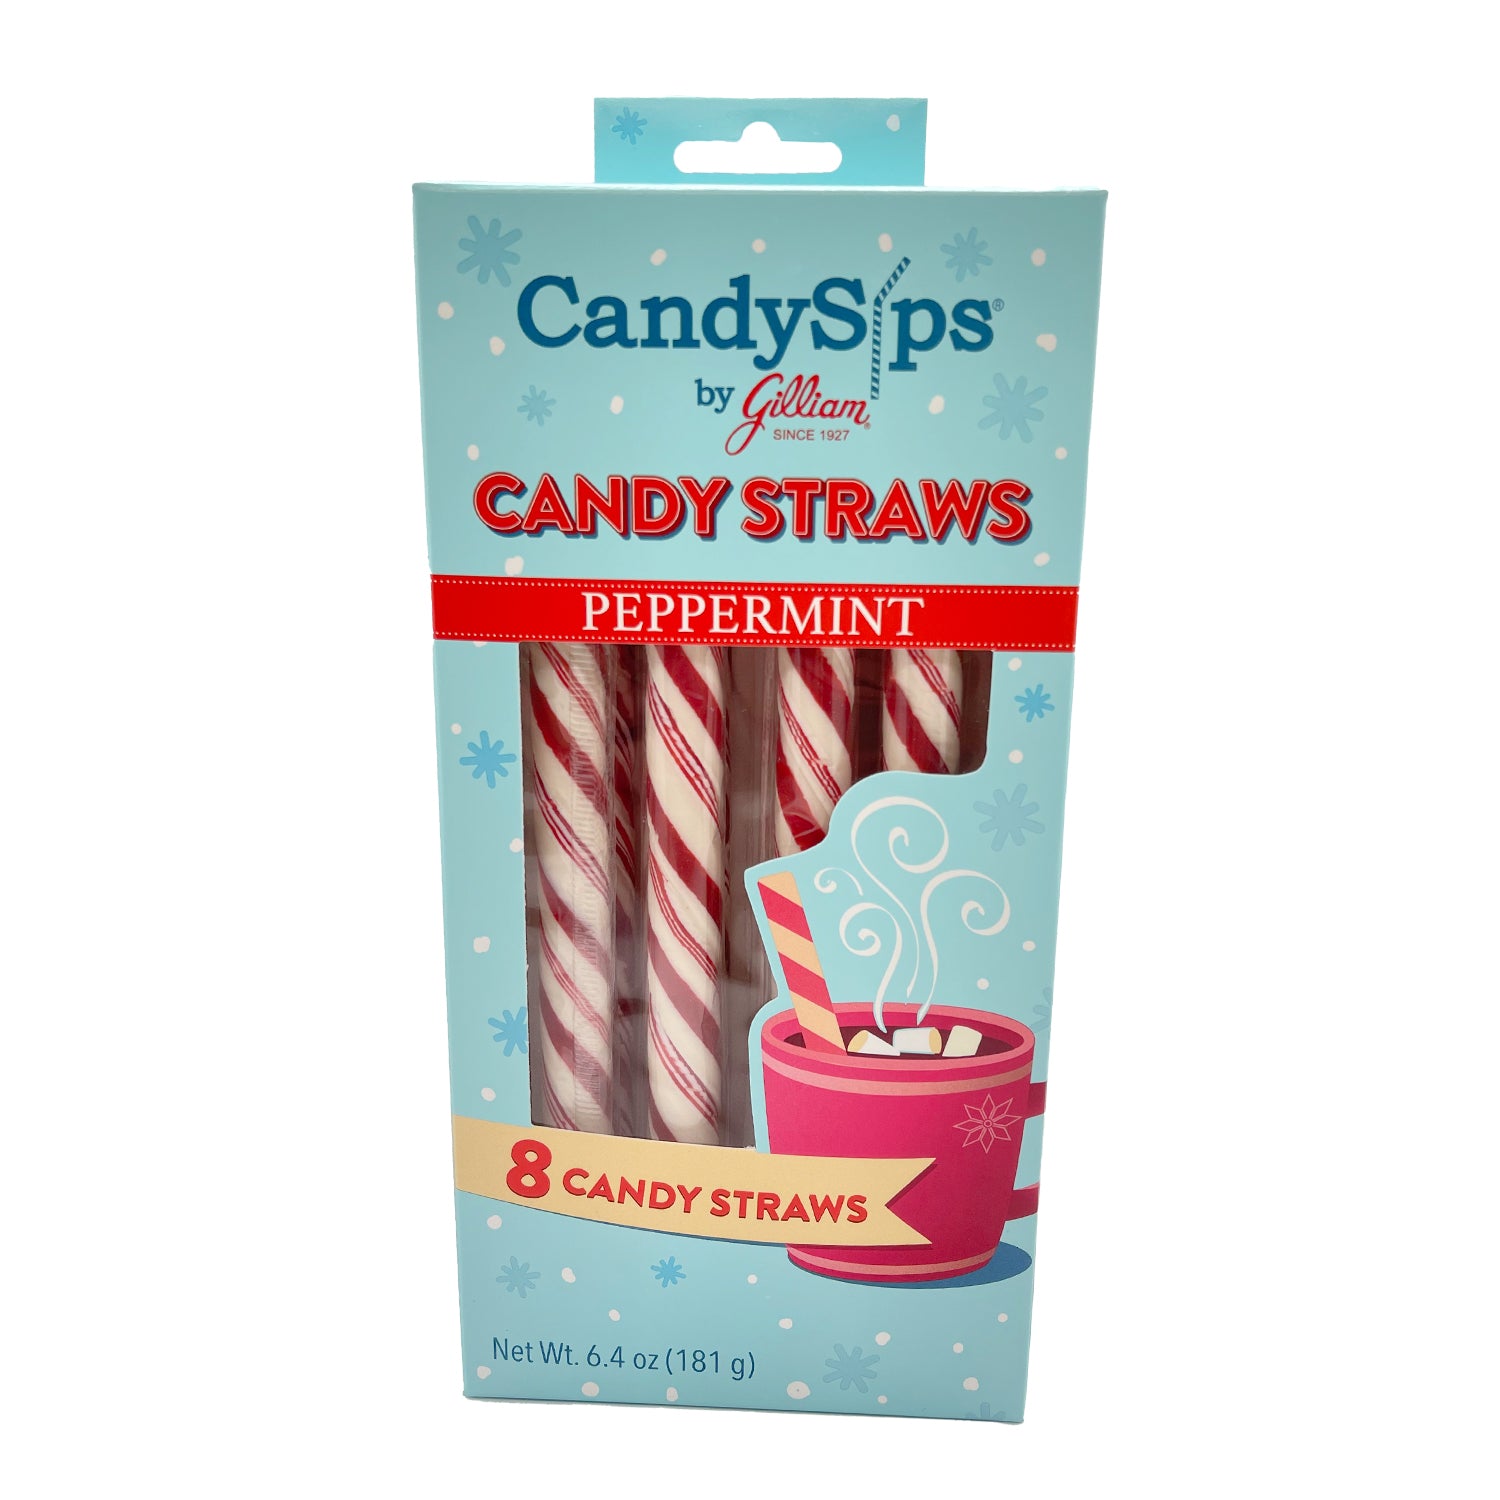 Candy Cane Straw